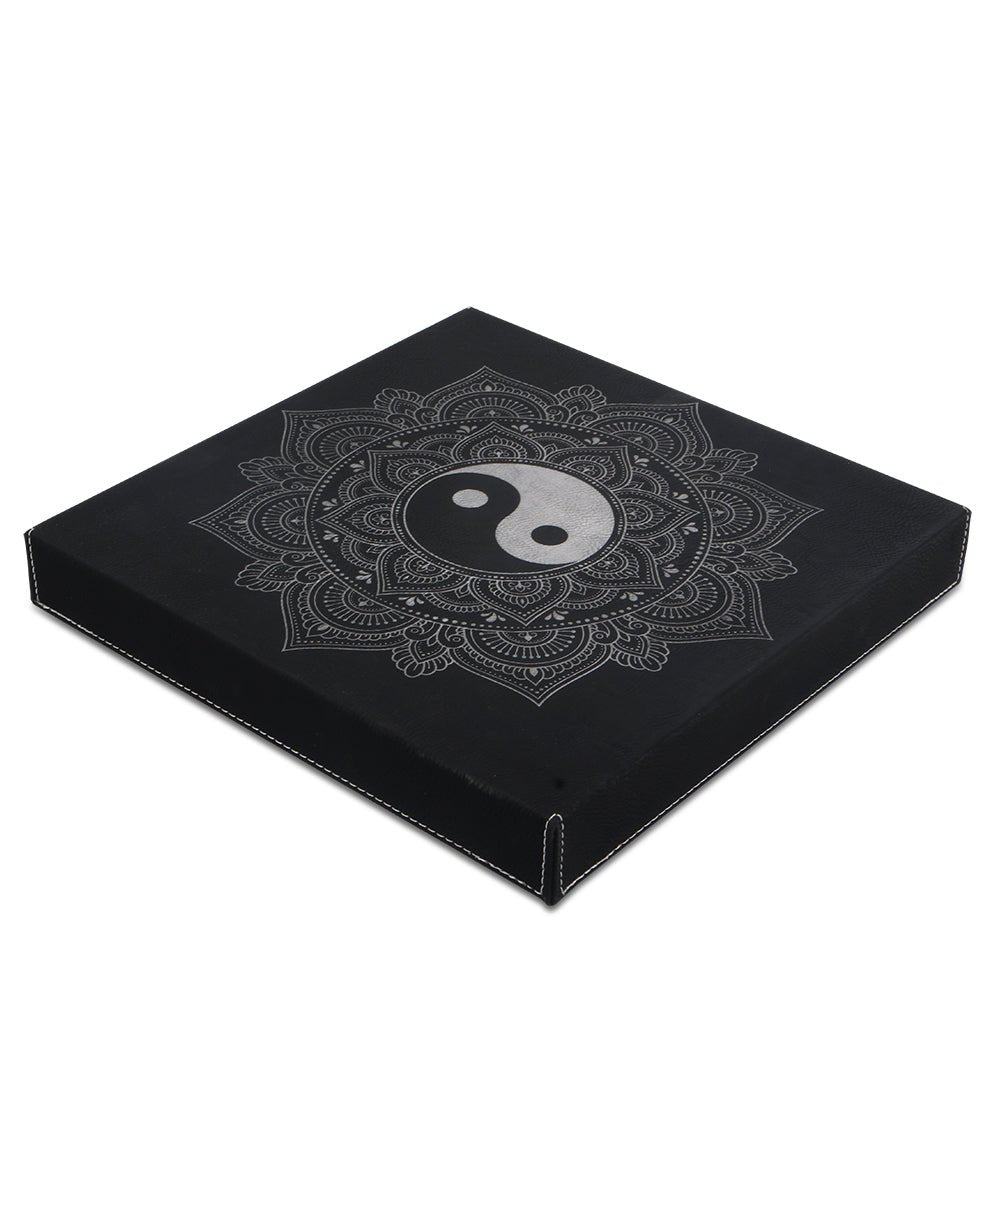 Yin Yang Mandala Wall Hanging in Black and Silver - Wind Chimes